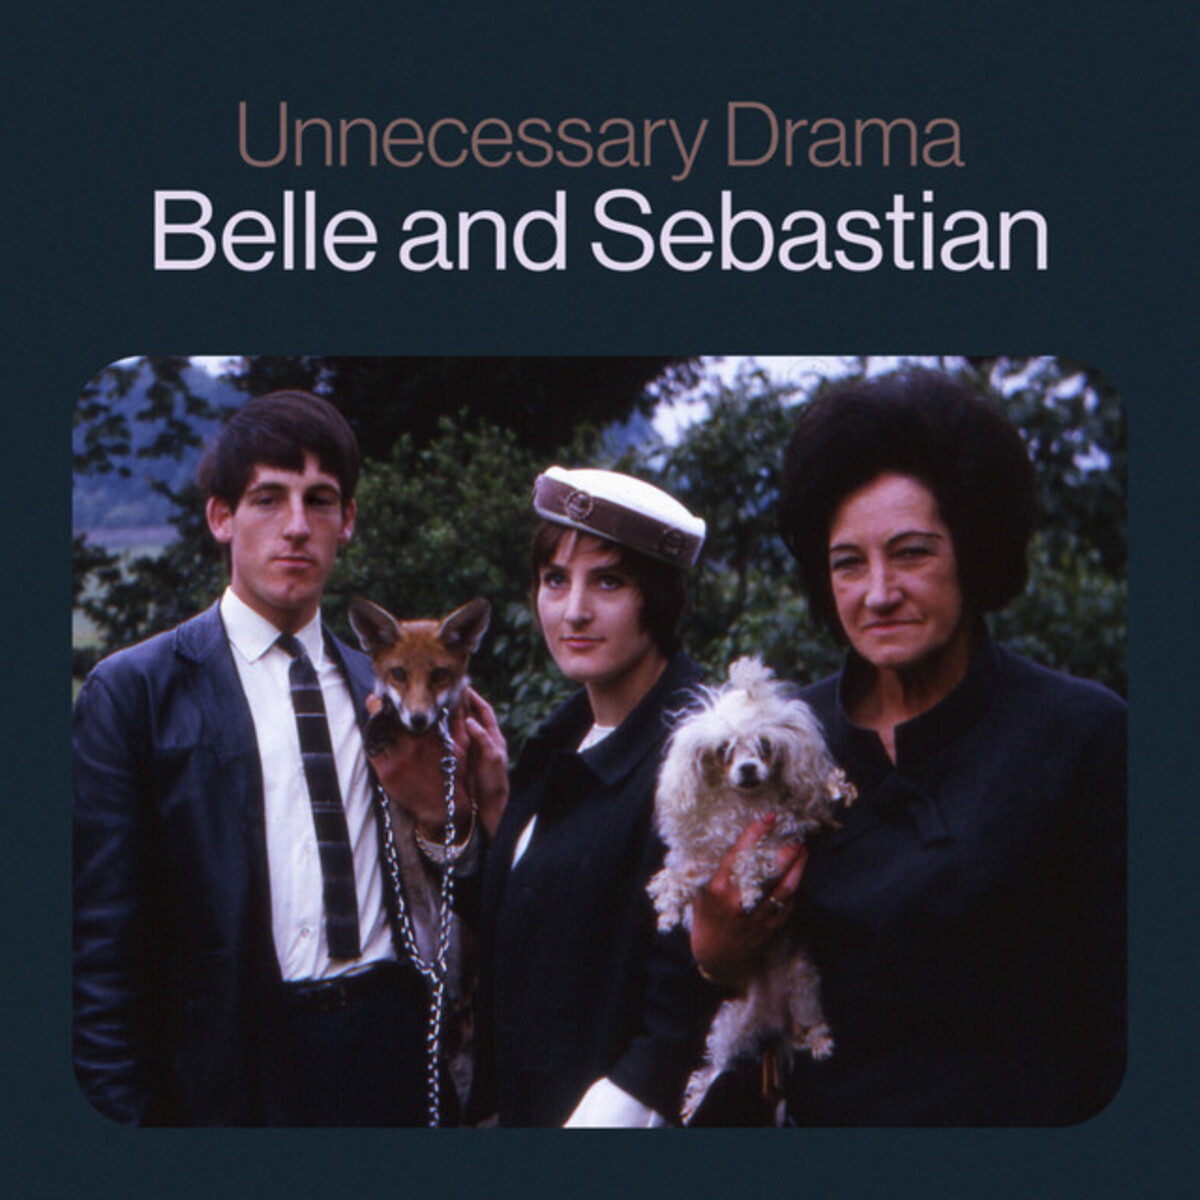 Belle and Sebastian – “Unnecessary Drama”